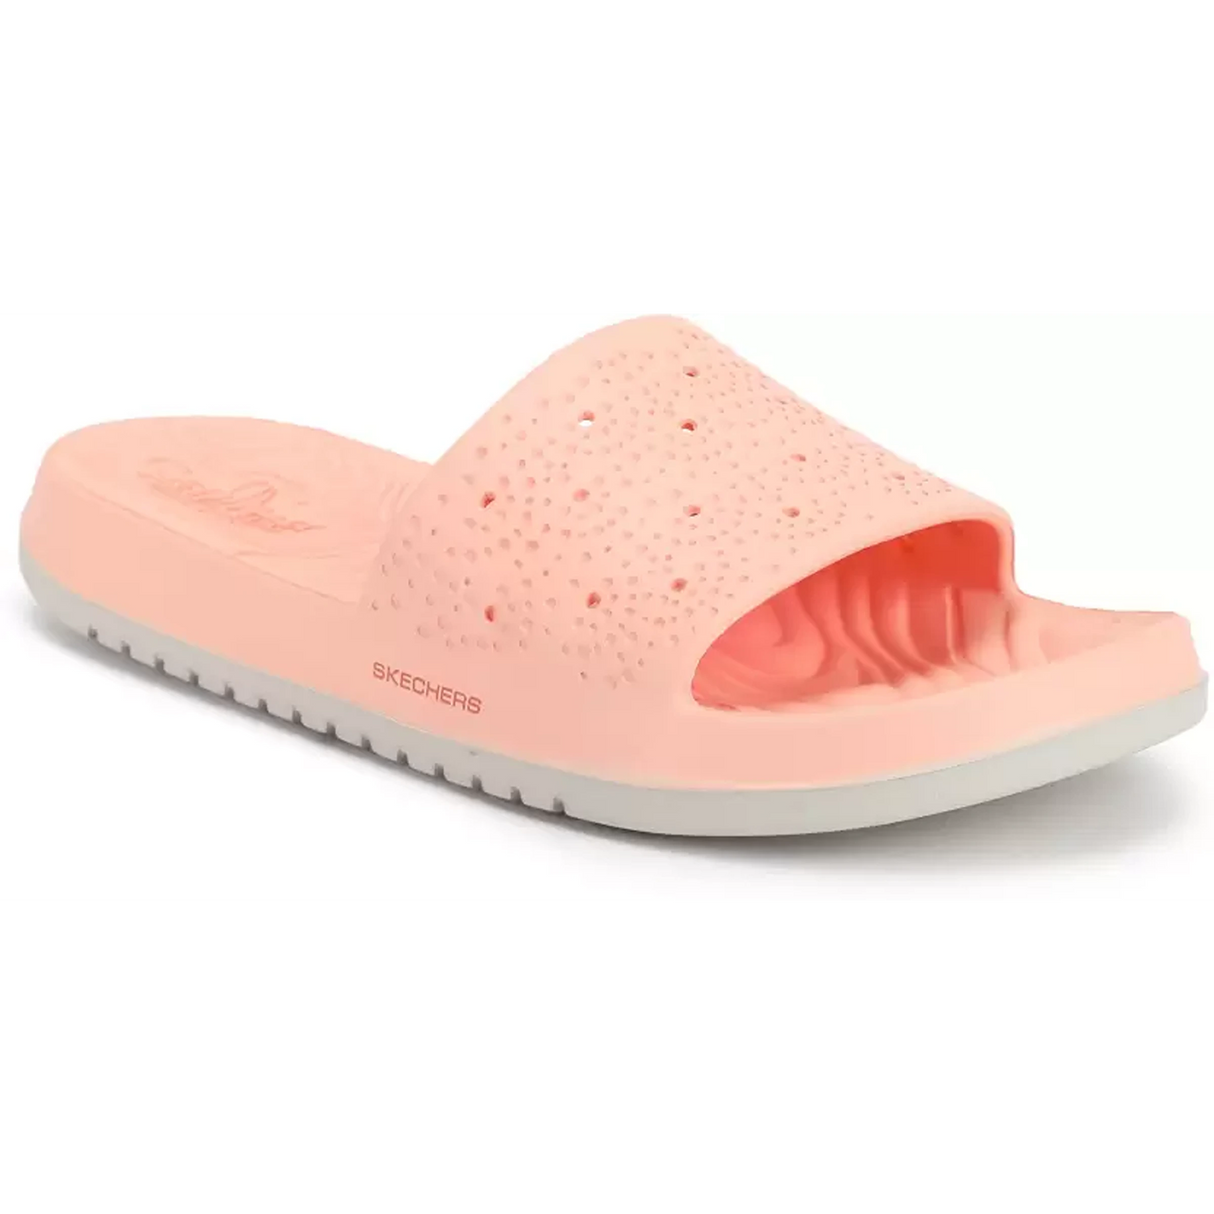 SKECHERS Cali Gear: Gleam - Beachy sandal